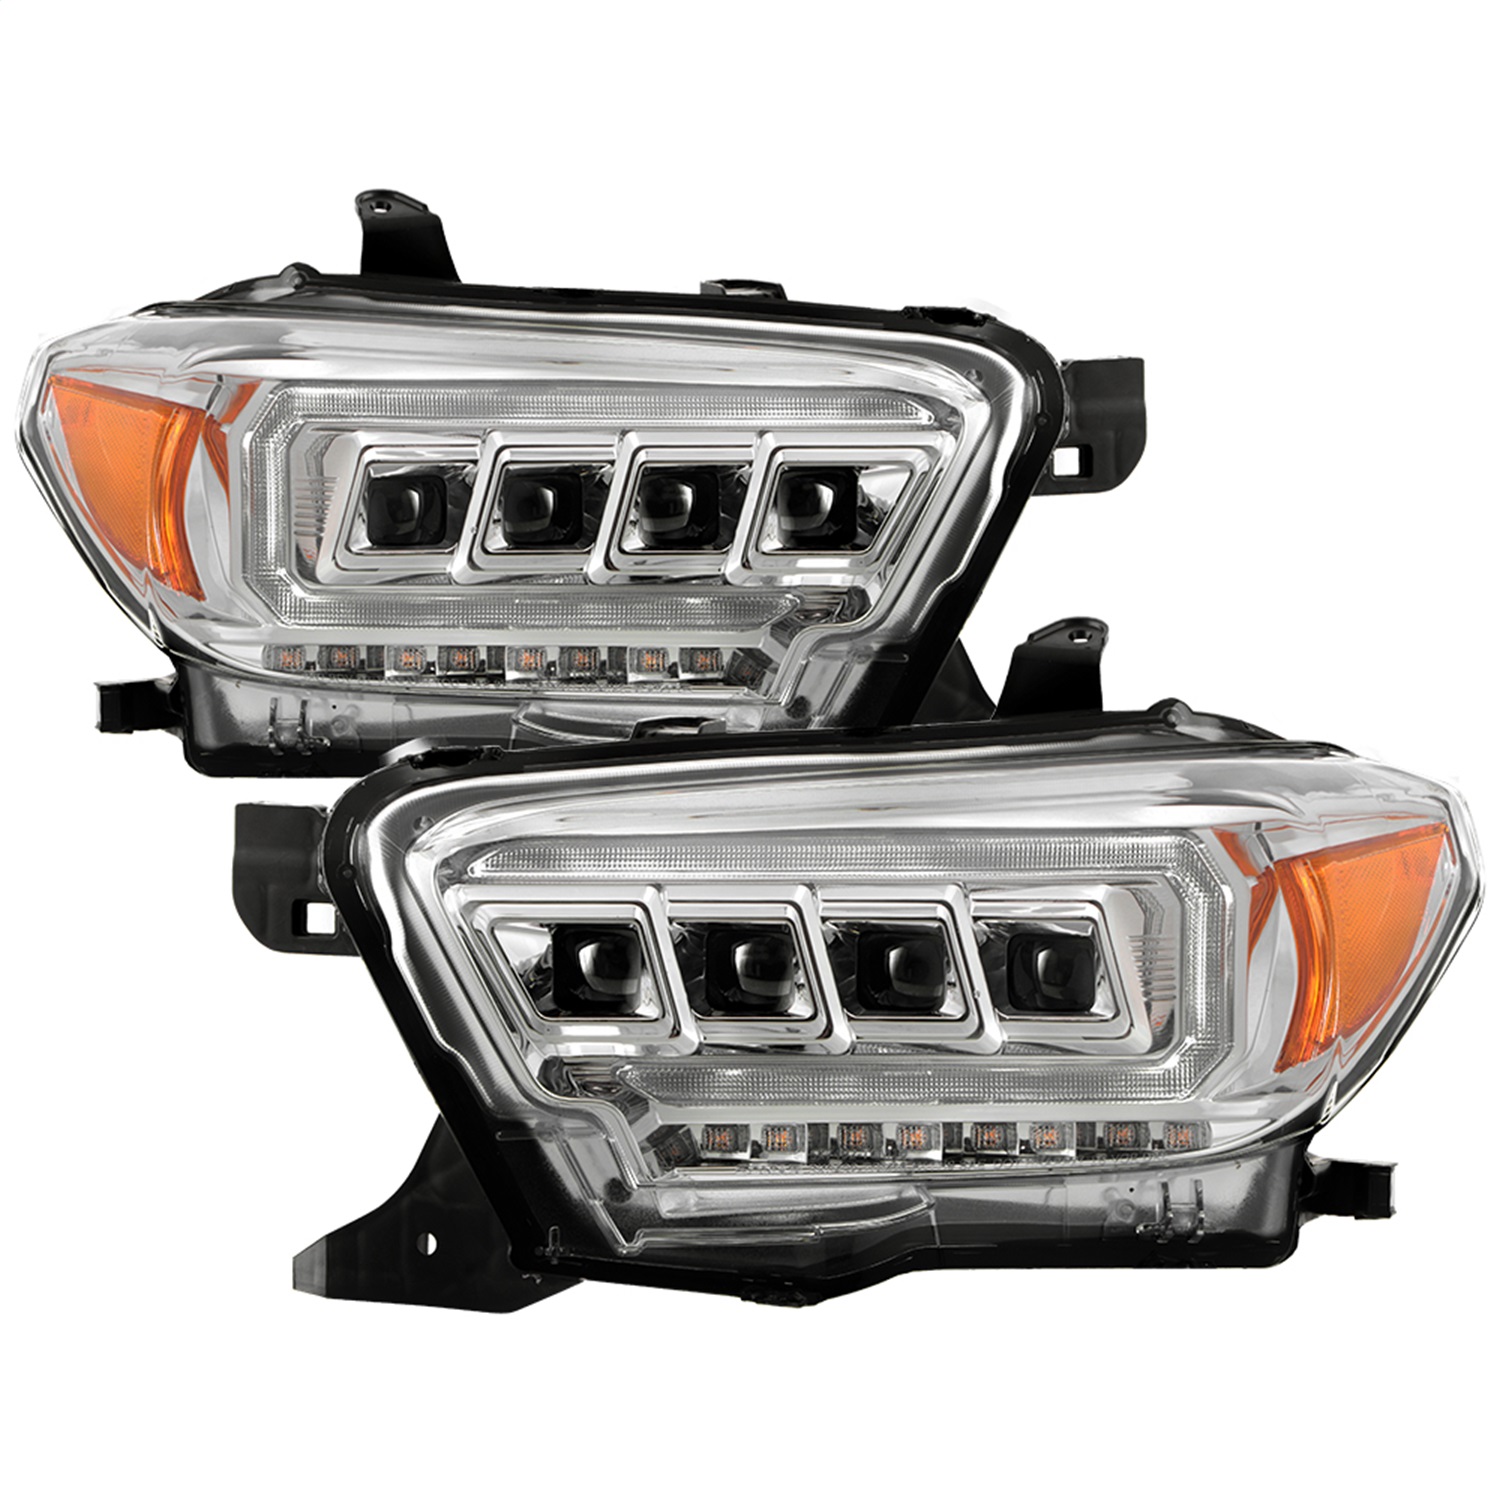 Spyder Auto 5088369 Projector Headlights Fits 16-20 Tacoma